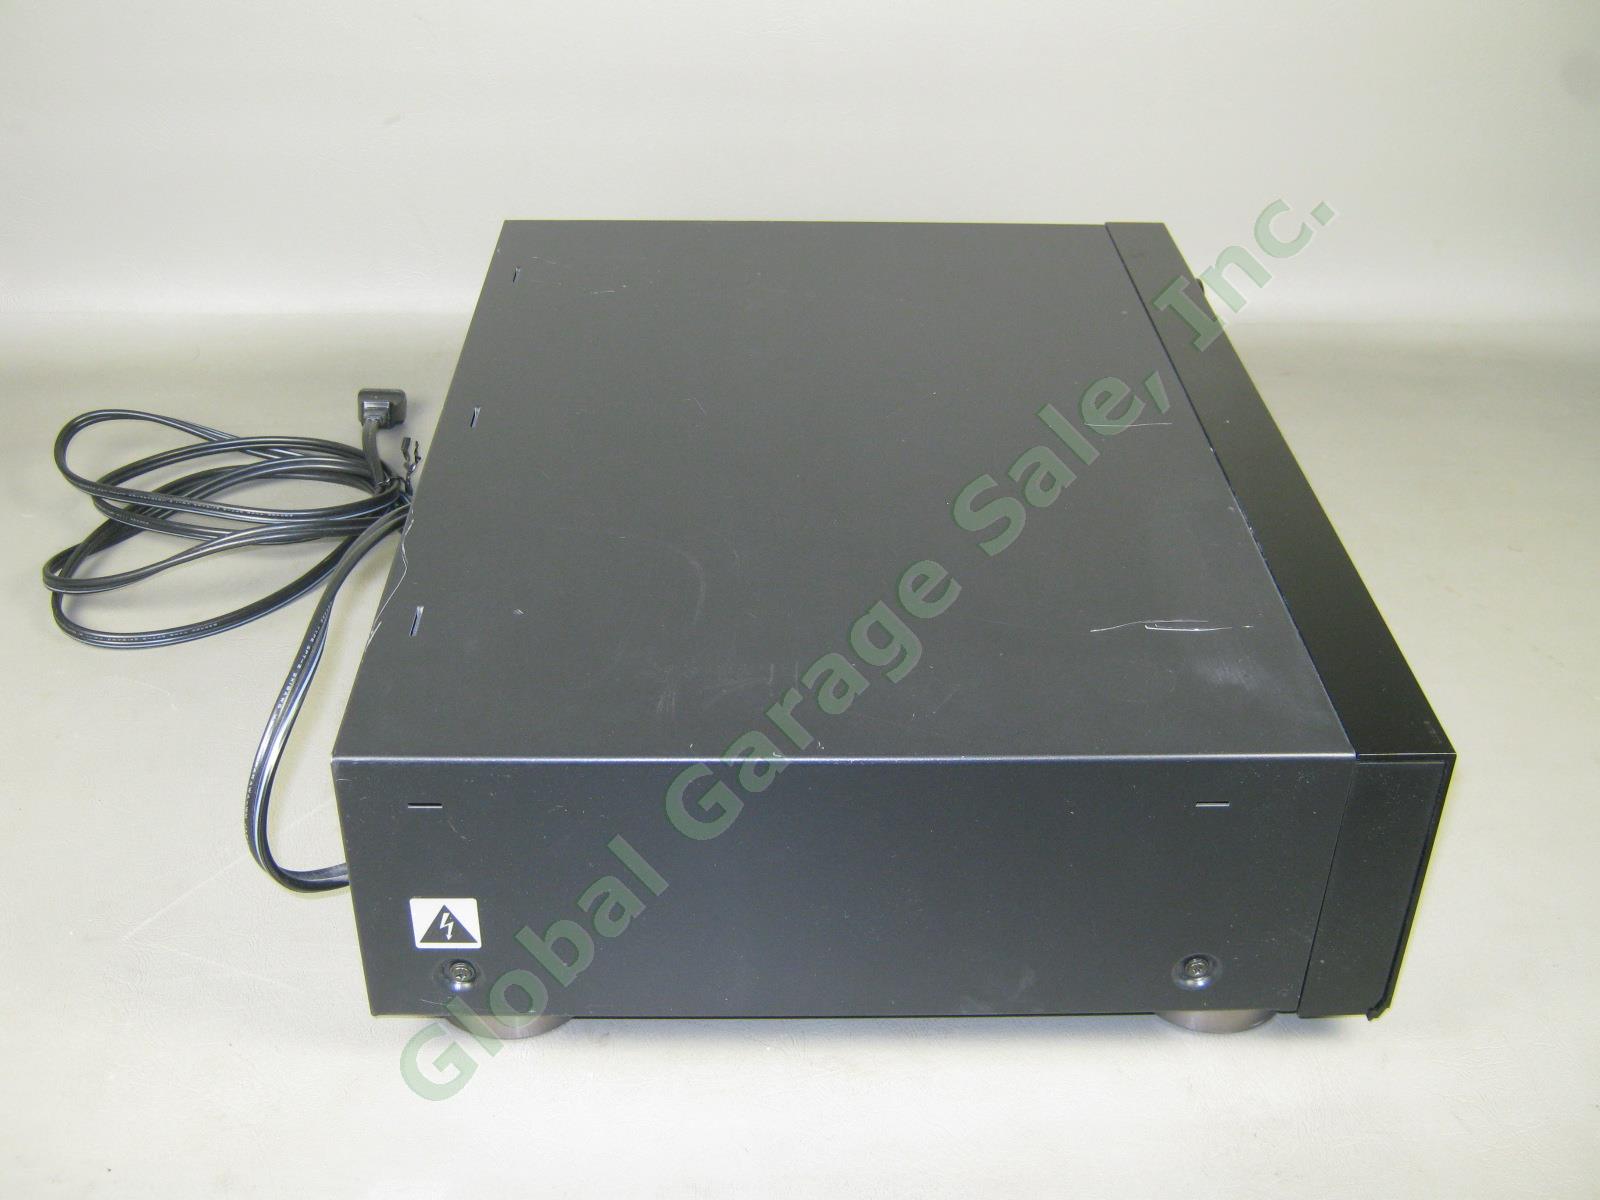 Sony DTC-700 DAT Digital Audio Tape Deck Recorder RM-D55A Remote Manual Bundle 4